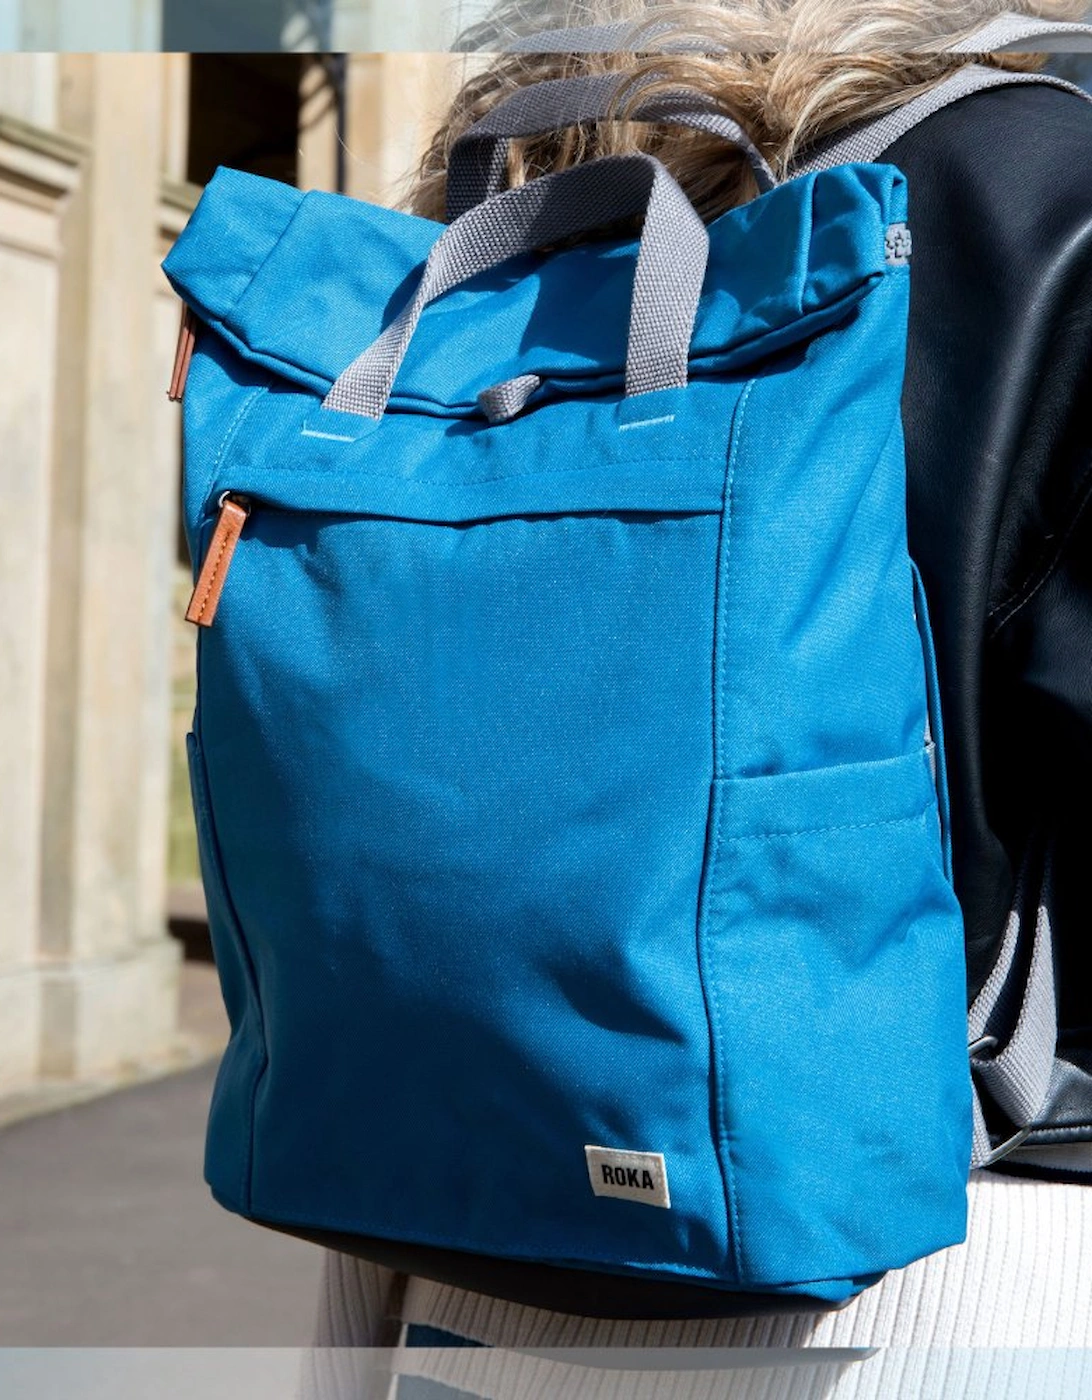 Finchley A Medium Backpack